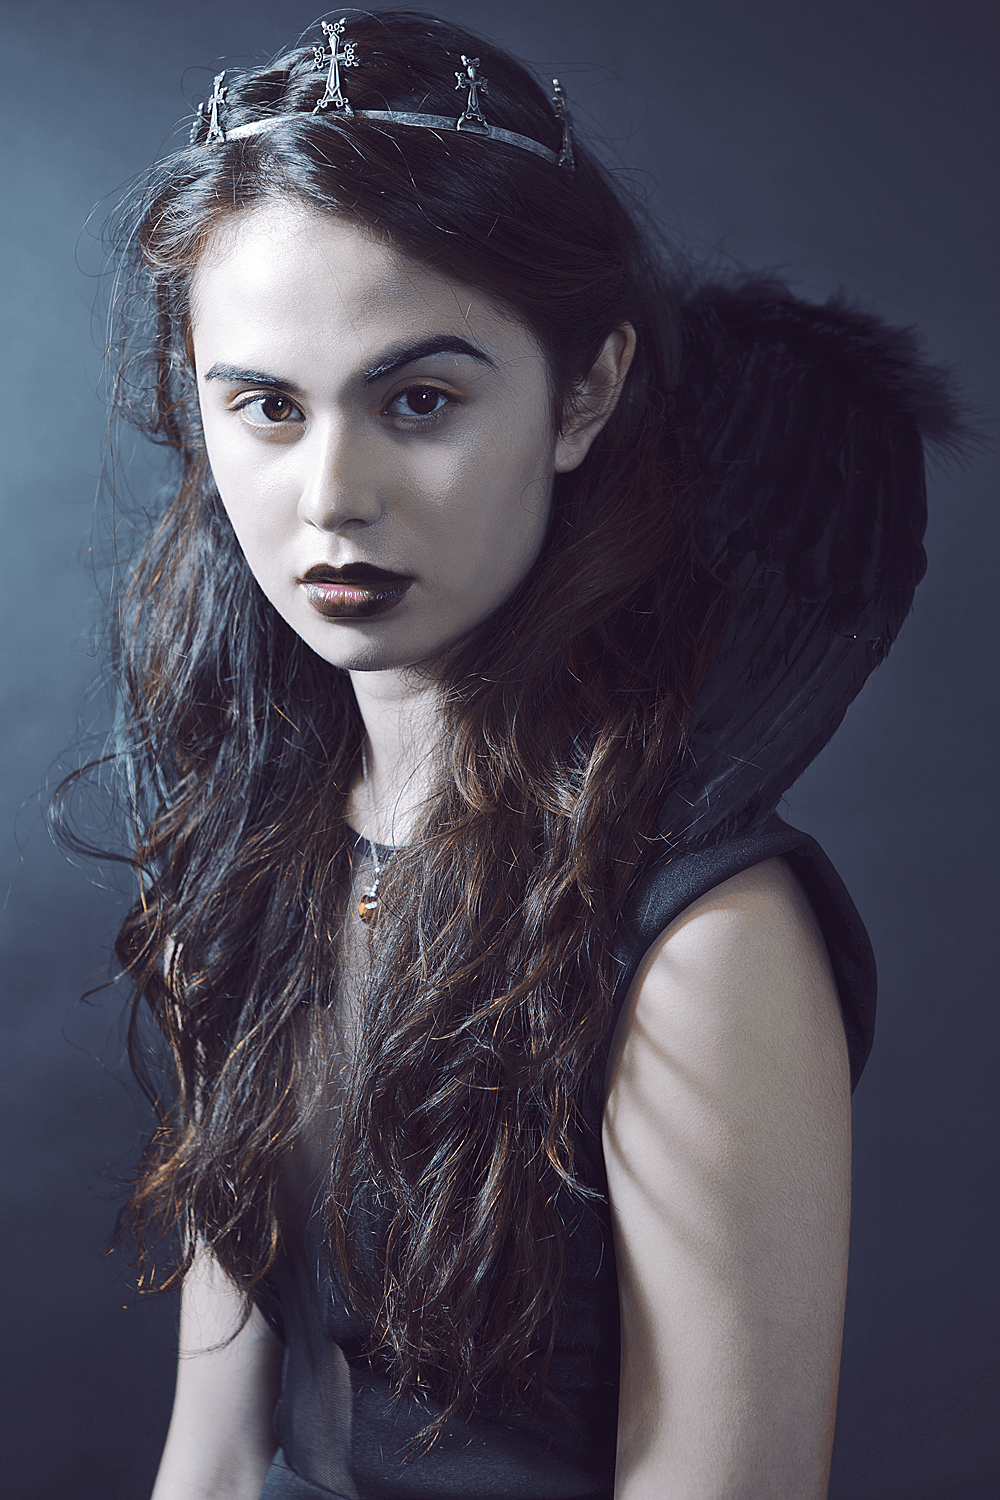 model  girl  WOMAN evil queen fairytale fantasy clothes fashionable studio Flash